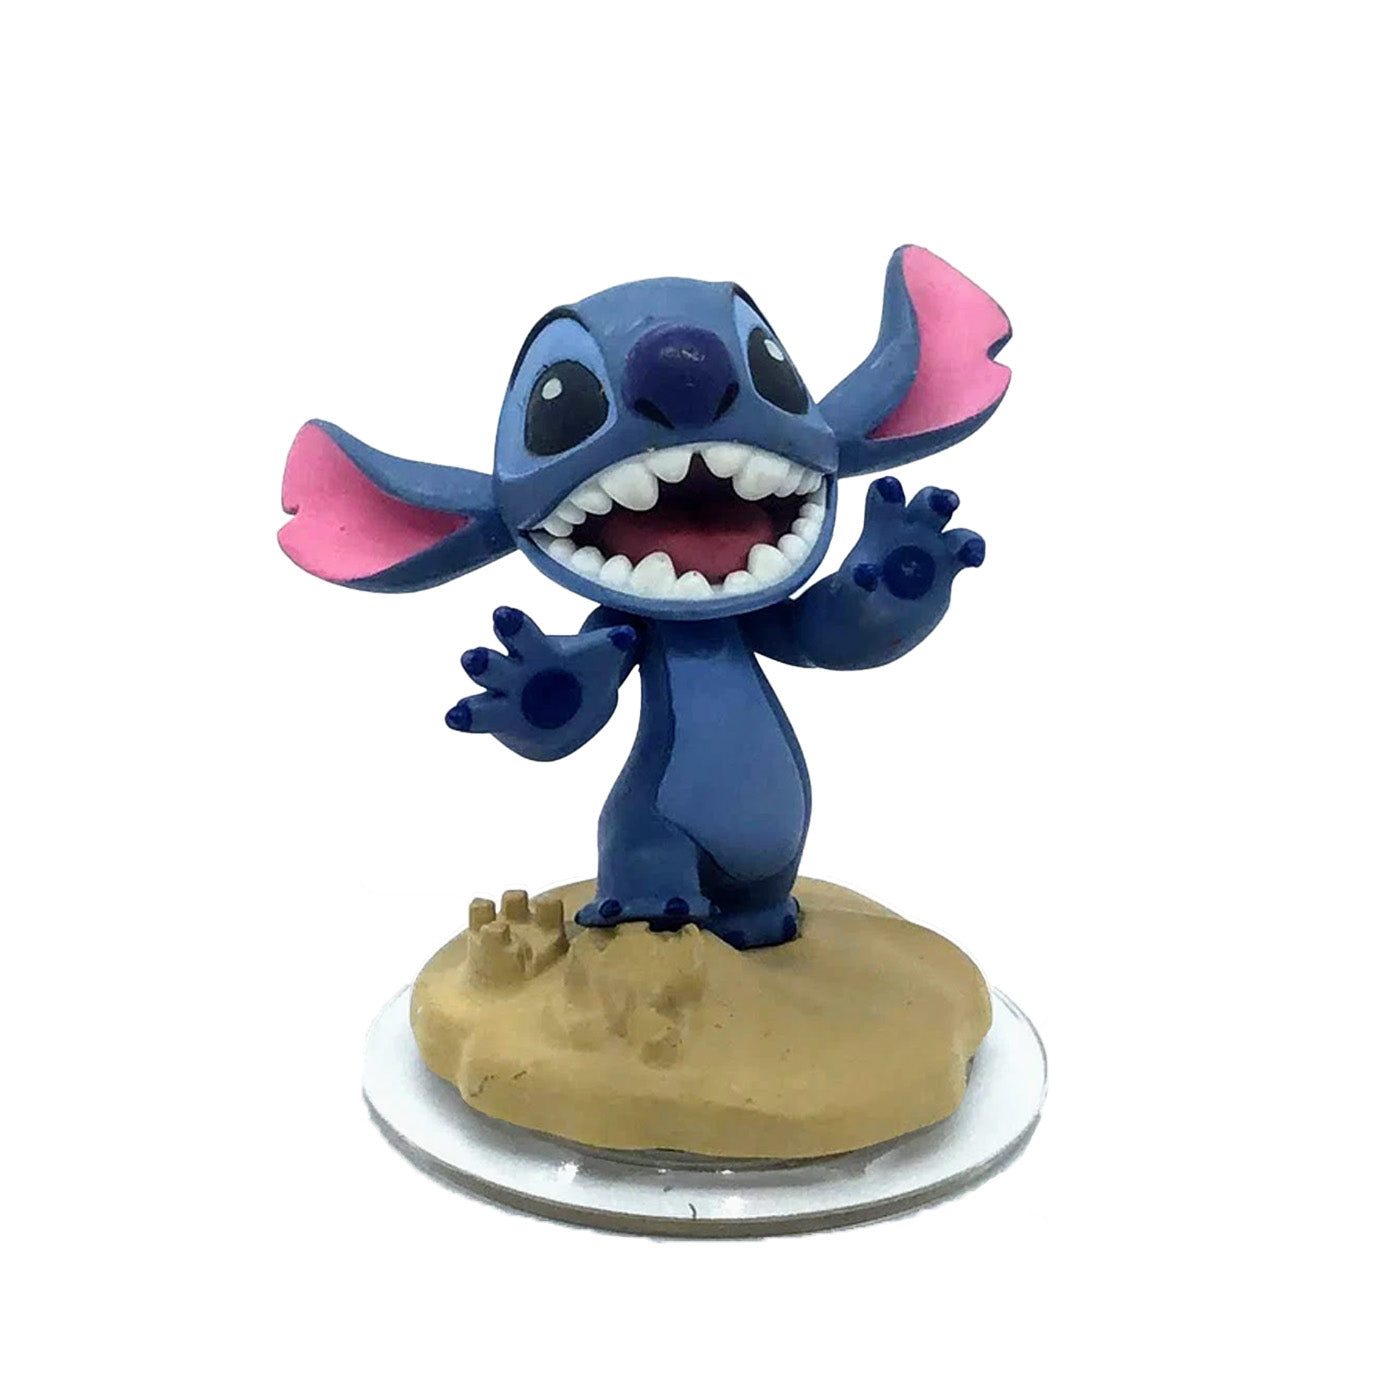 Disney Infinity 2.0 Character: Stitch